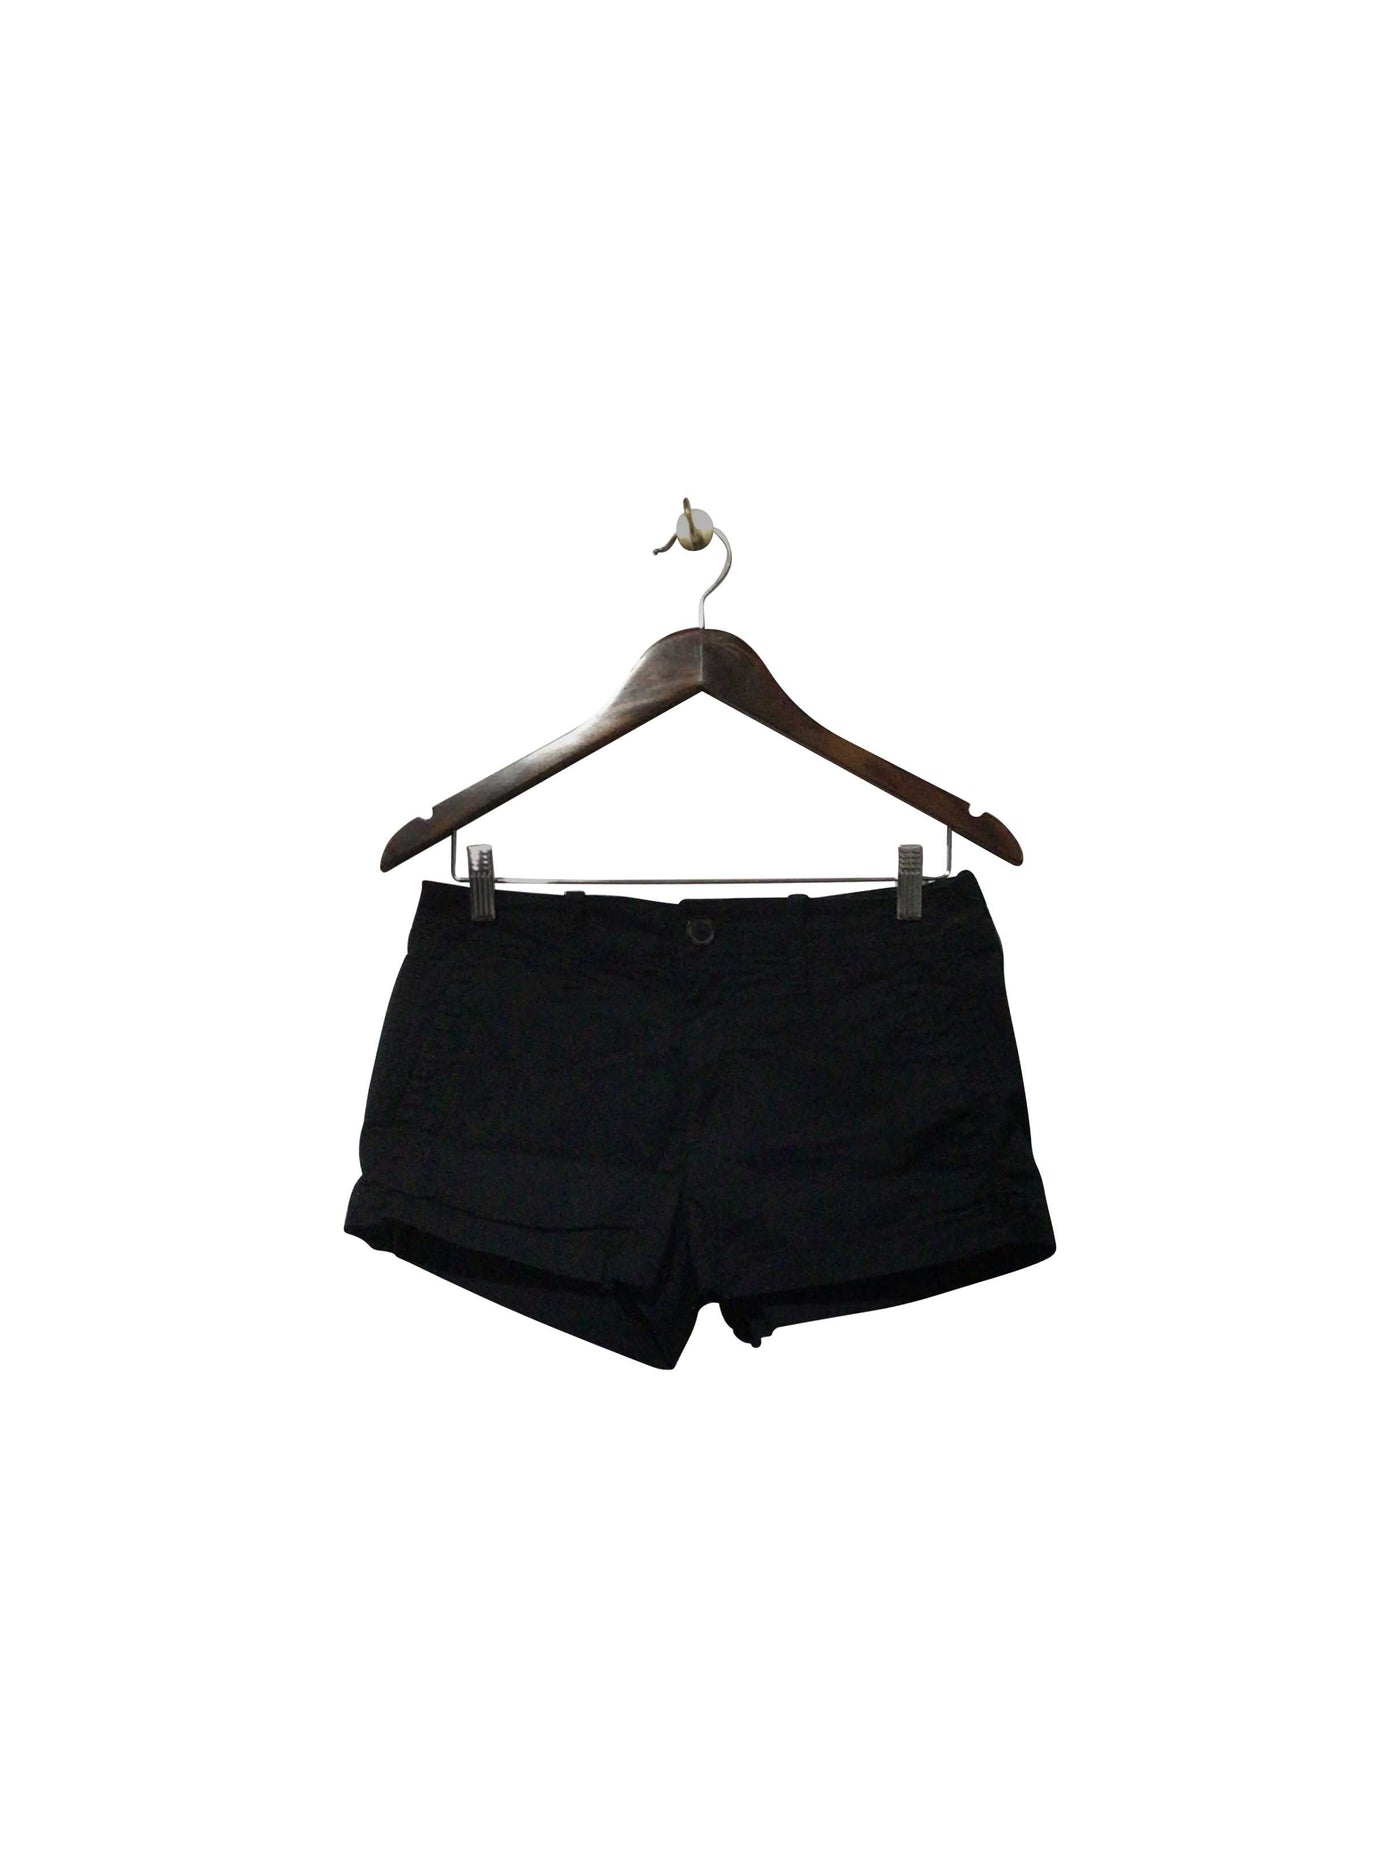 AMERICAN EAGLE Regular fit Pant Shorts in Black  -  4  11.99 Koop